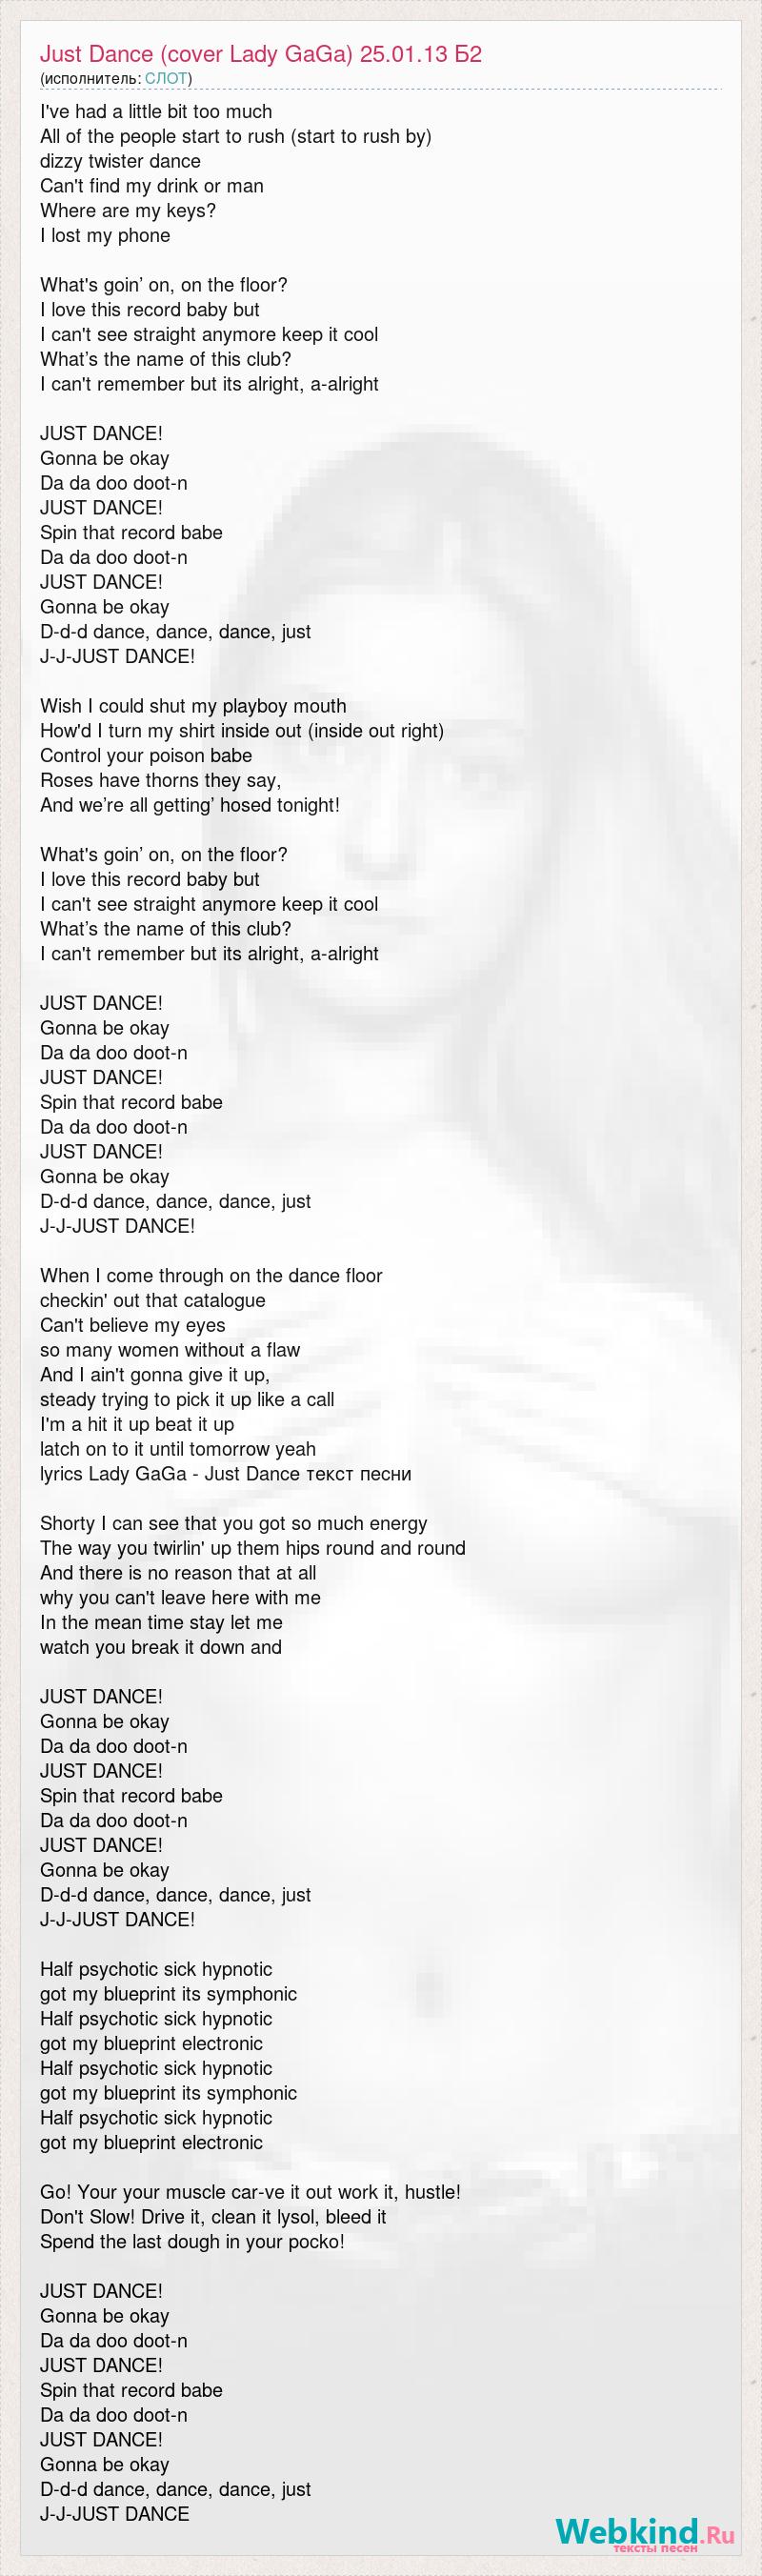 Just dance lady gaga lyrics